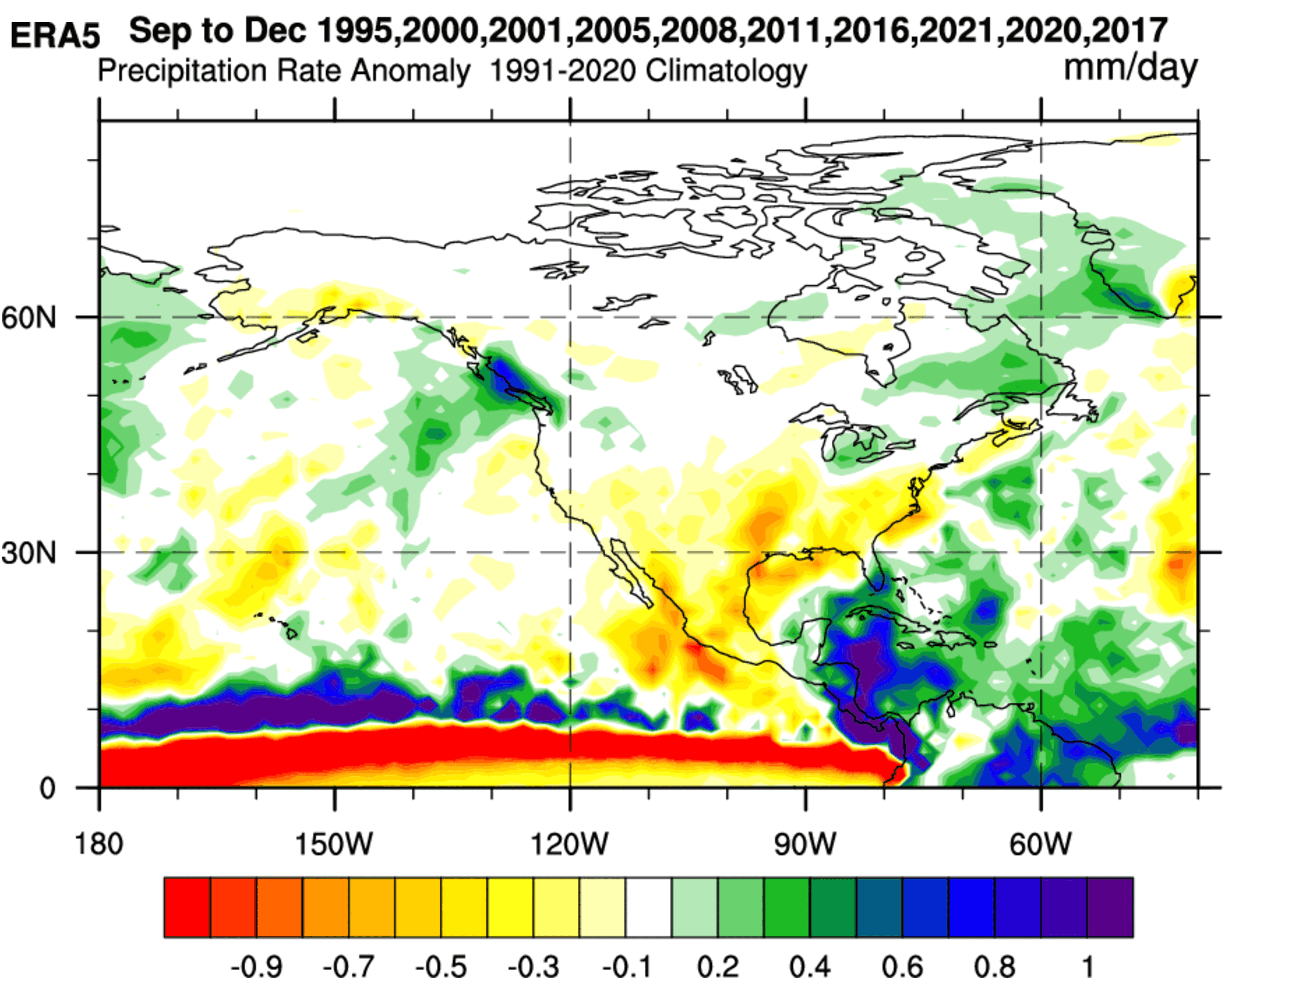 fall-forecast-la-nina-enso-historical-rainfall-anomaly-pattern-united-states-canada